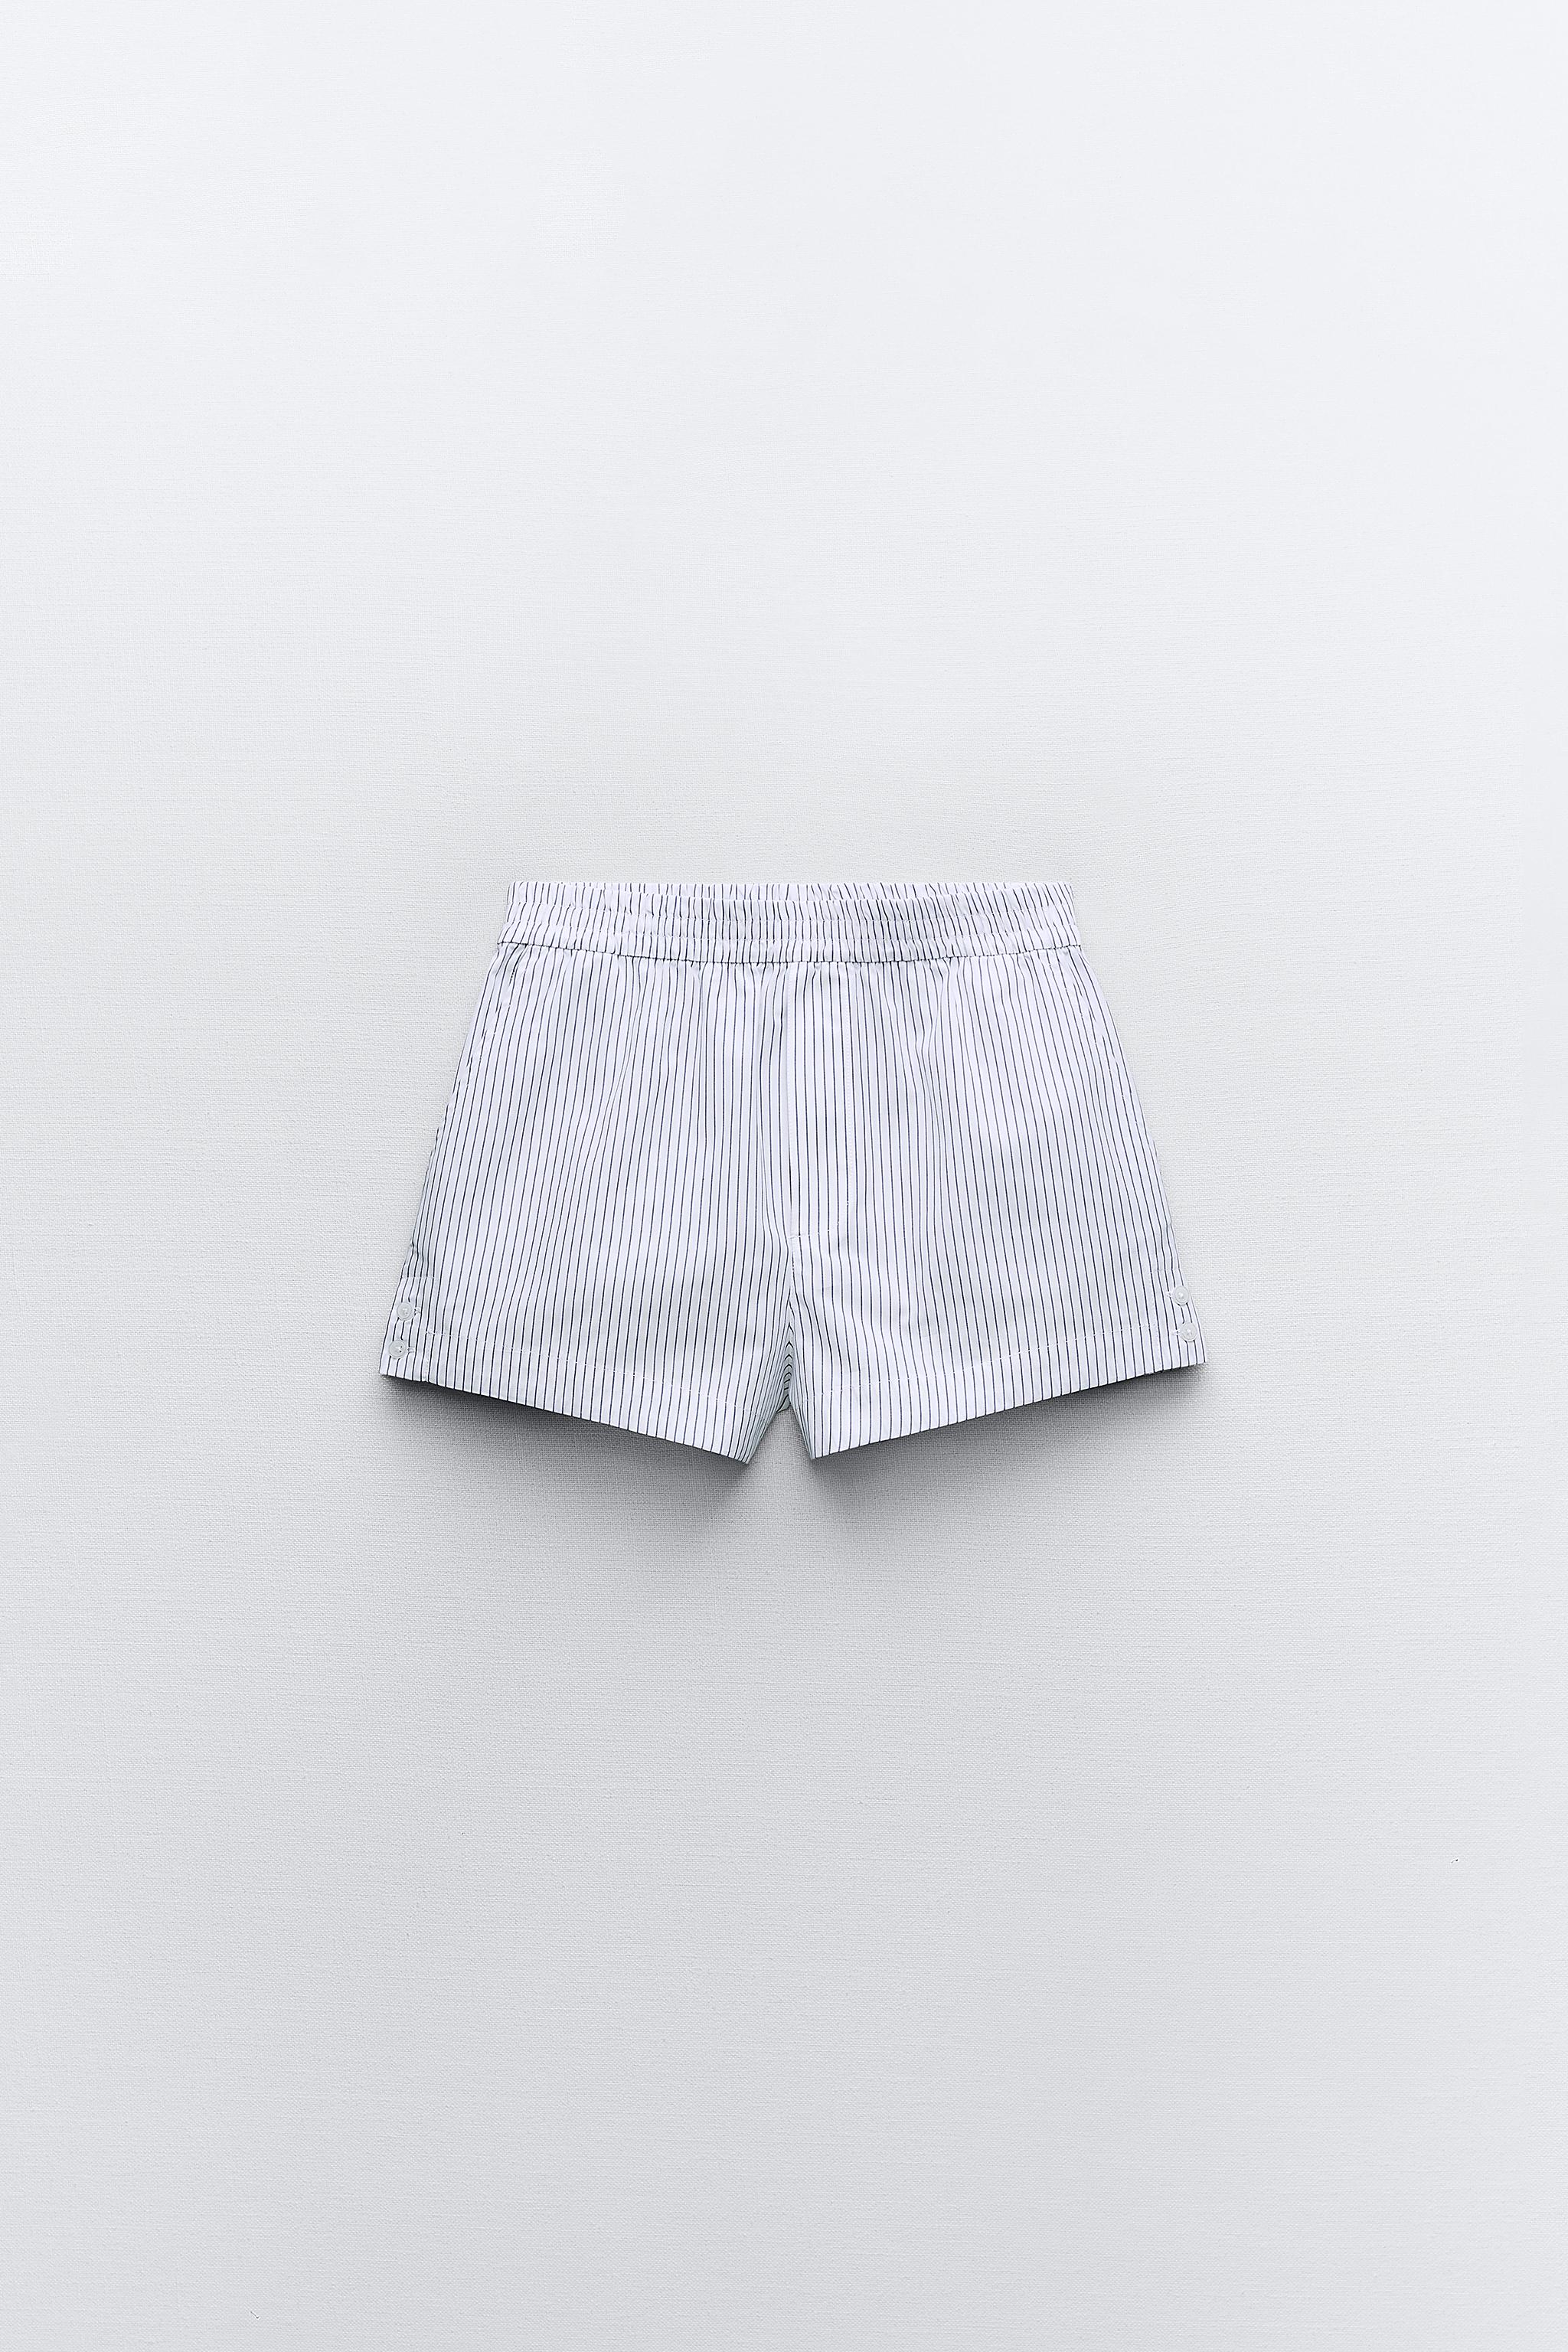 Colorichiari cow-print bermuda shorts - Neutrals